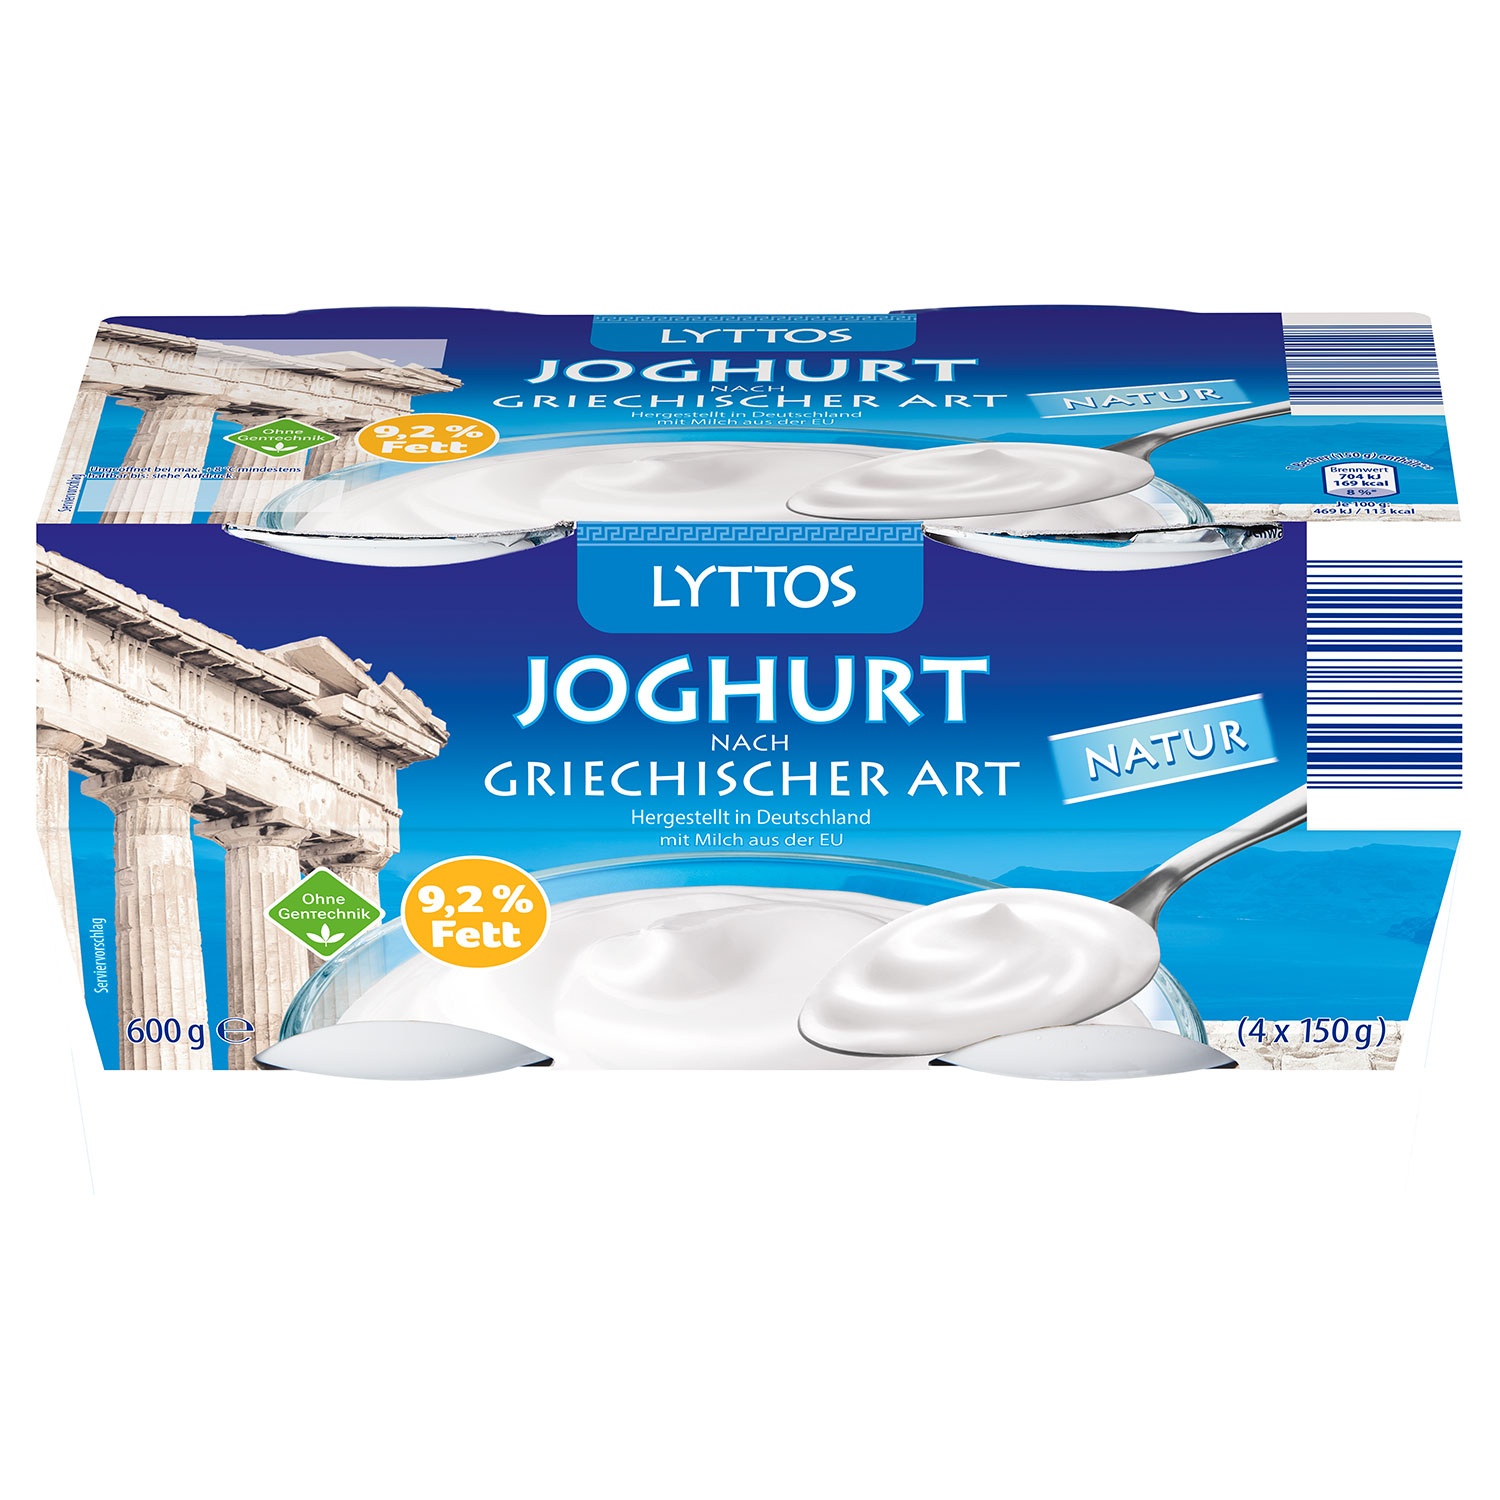 LYTTOS Joghurt nach griechischer Art 600g